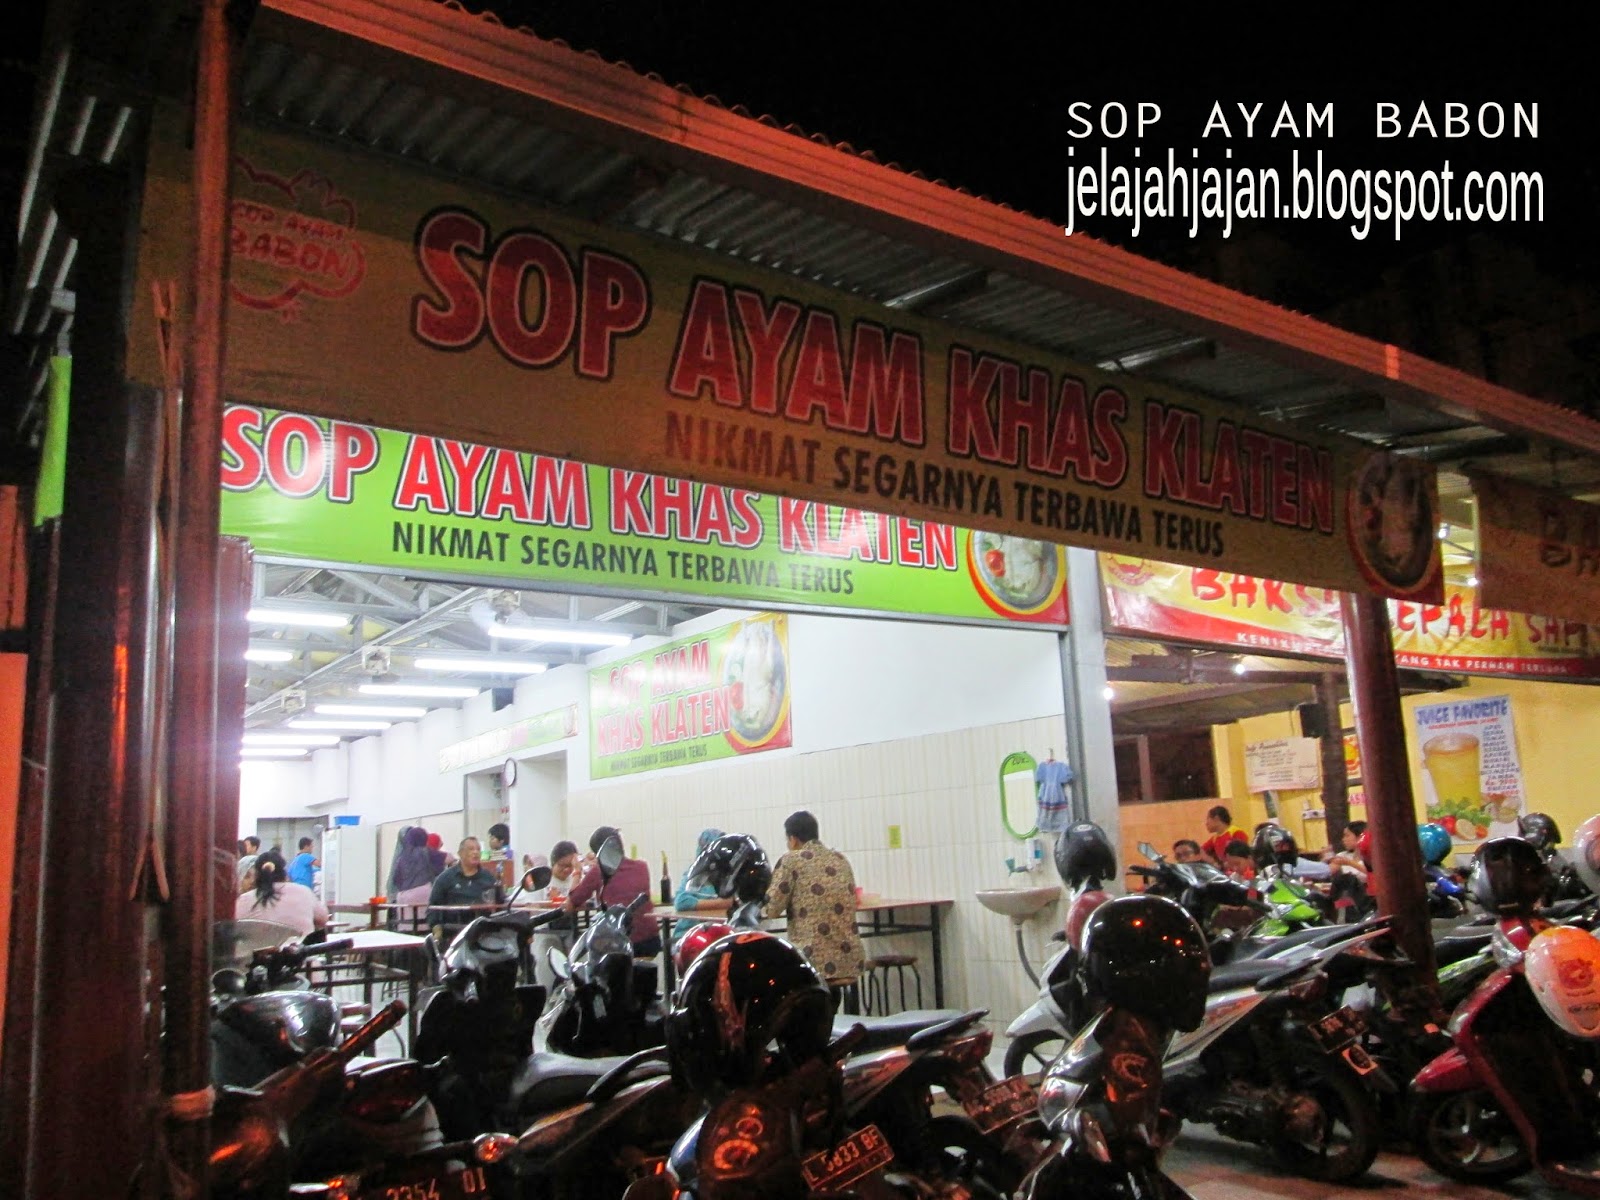 Jelajahjajan: Menjelajahi Sop Ayam Babon - Surabaya